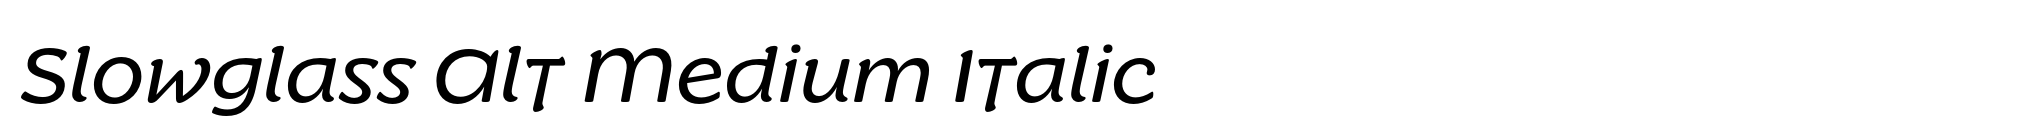 Slowglass Alt Medium Italic image